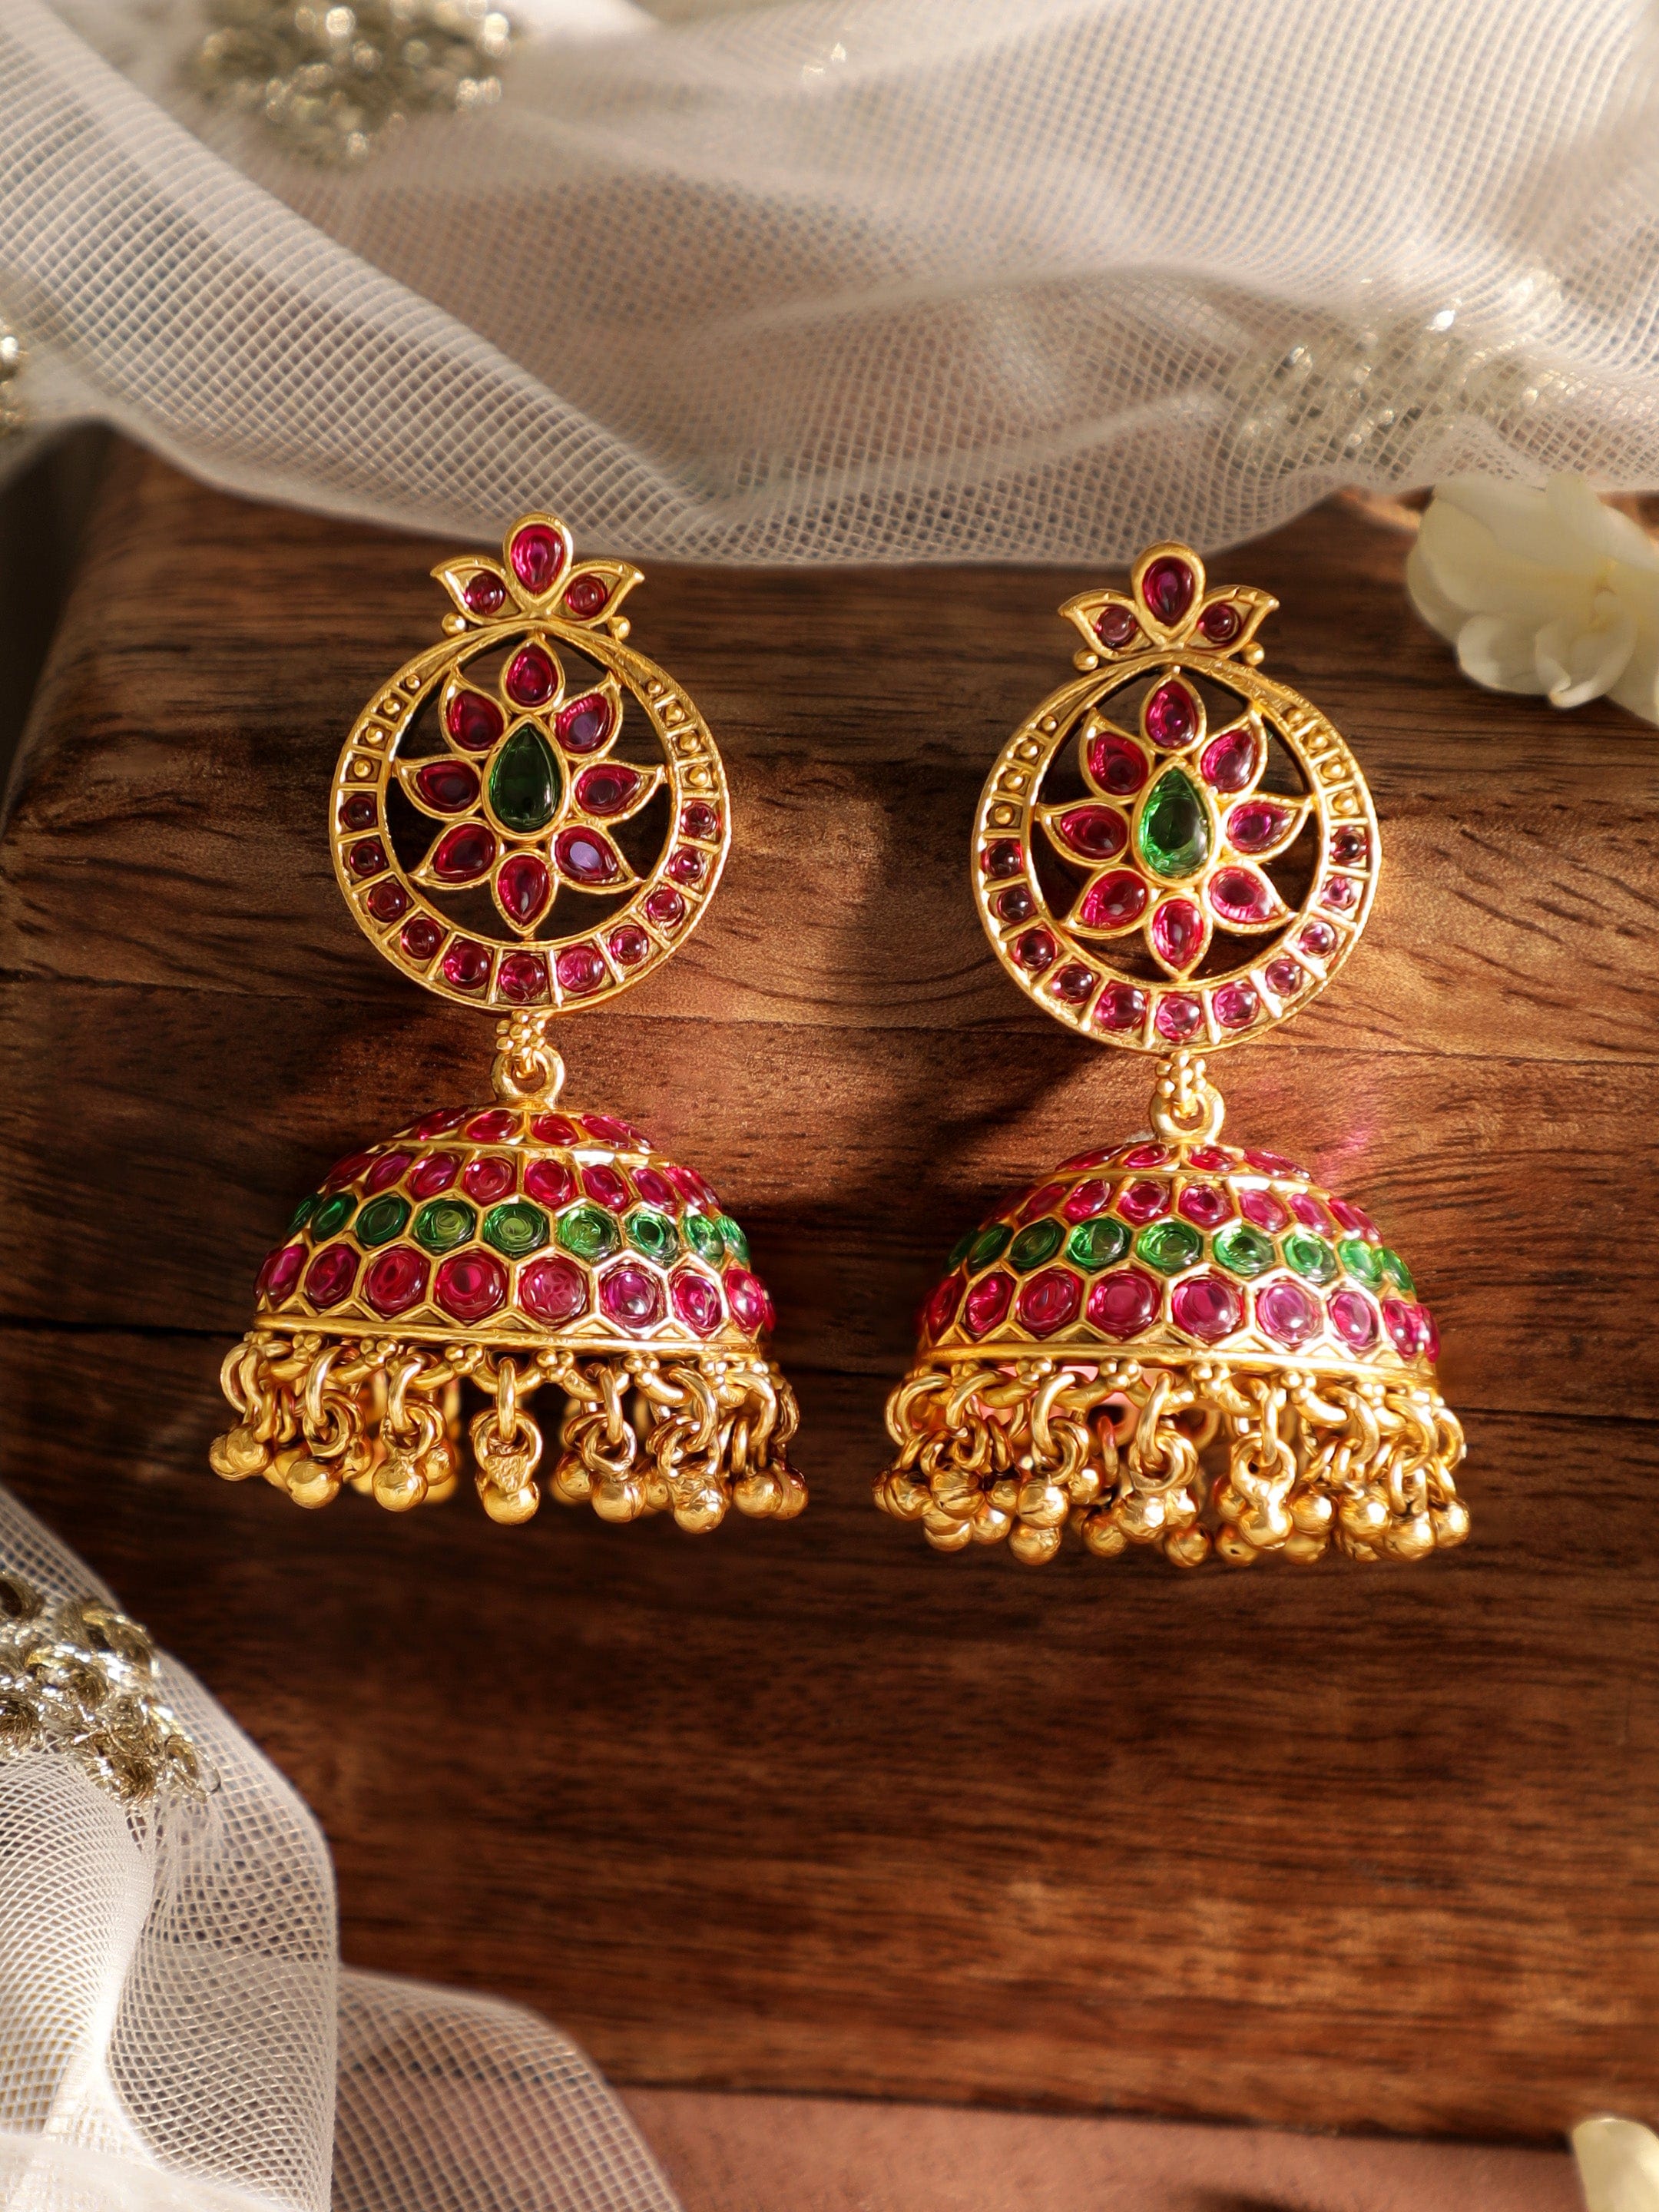 Sila AD Dome Shaped Jhumka Earrings | Indian Jewelry